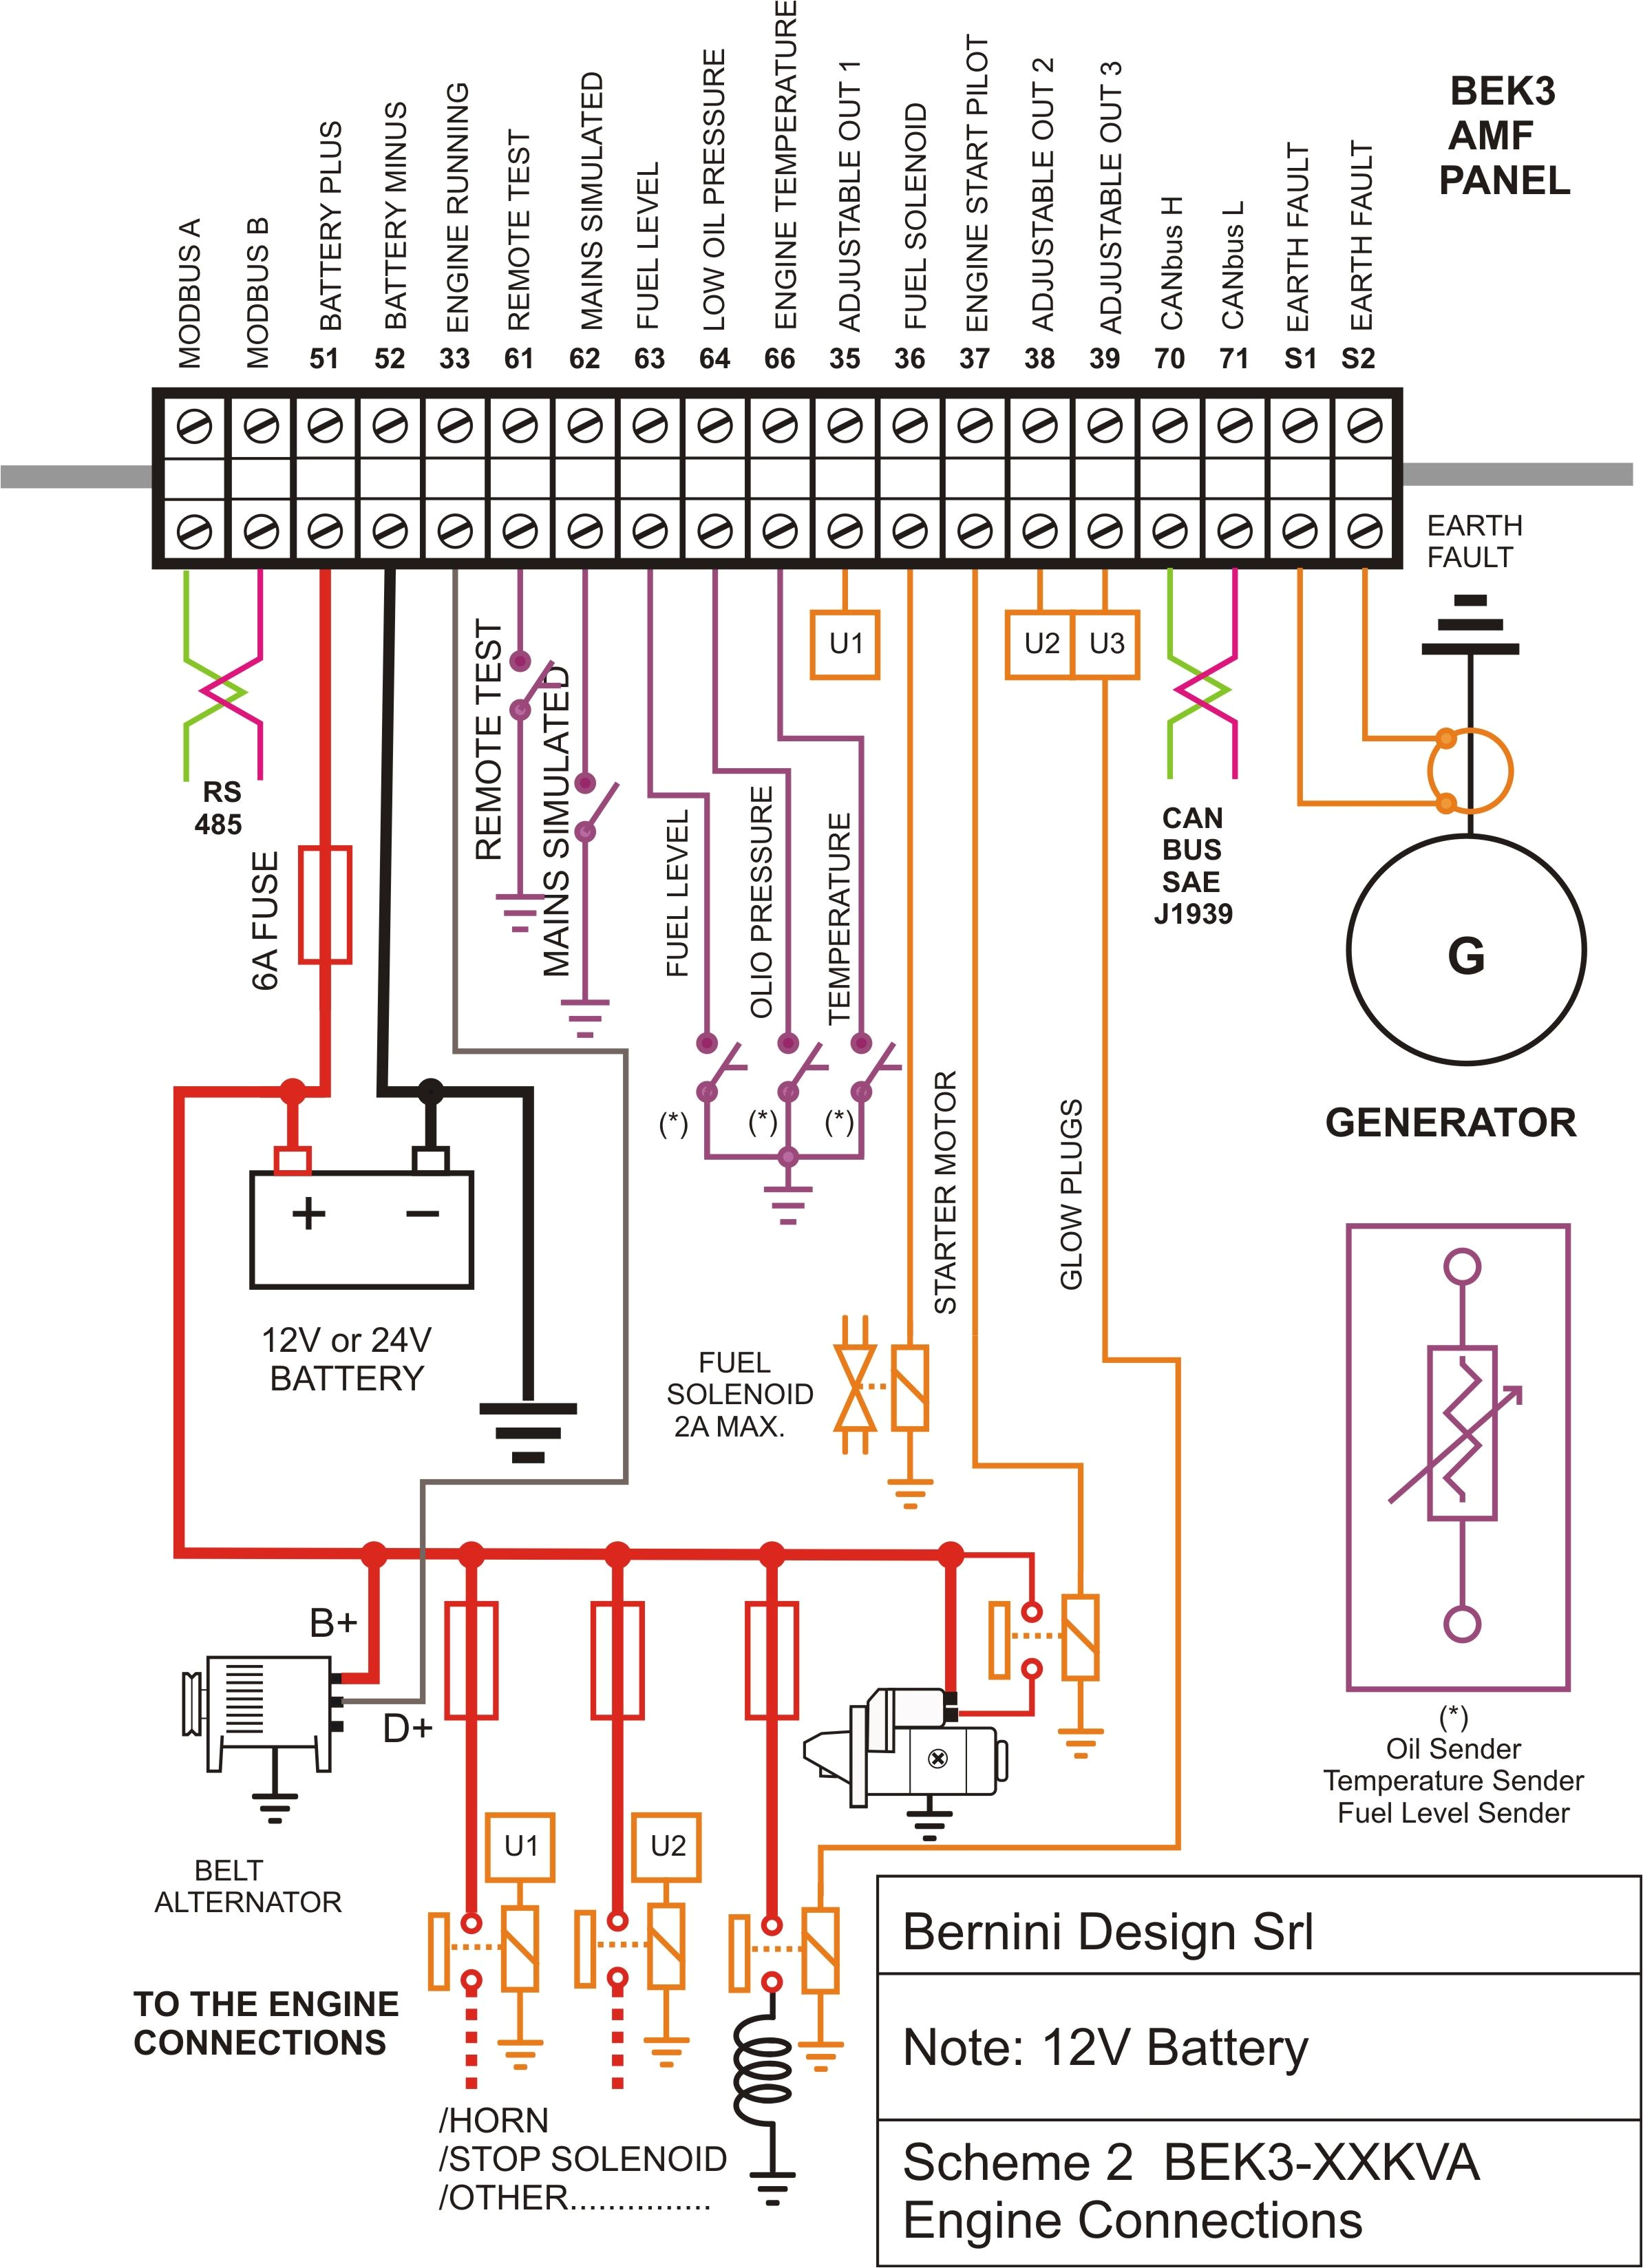 dictator fuel management wiring diagram home wiring diagram spitronics engine management wiring diagram management wiring diagram